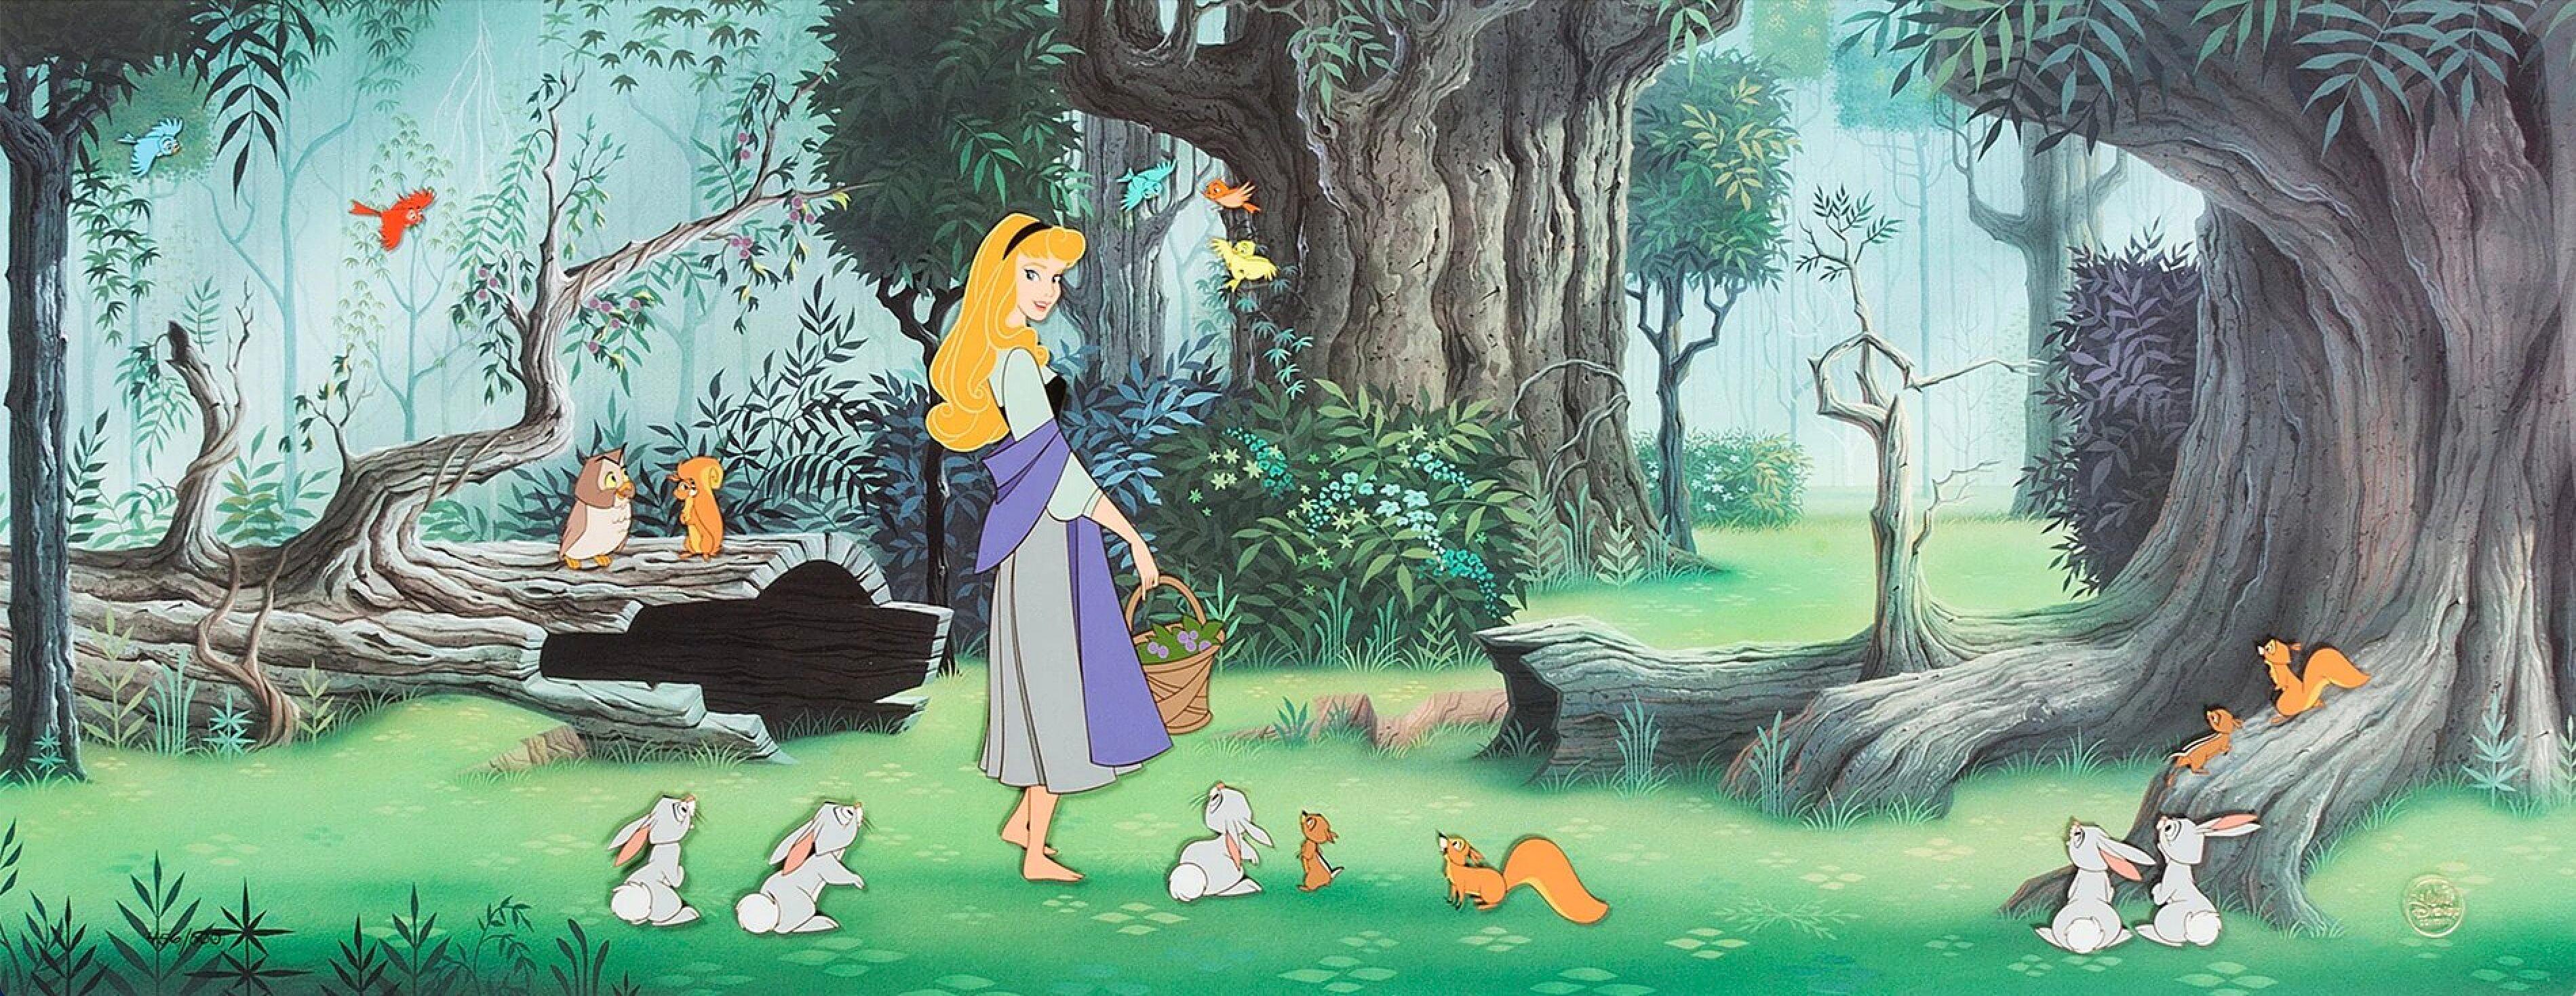 Sleeping Beauty: Limited Edition Hand-Painted Cel - Art by Walt Disney Studio Artists